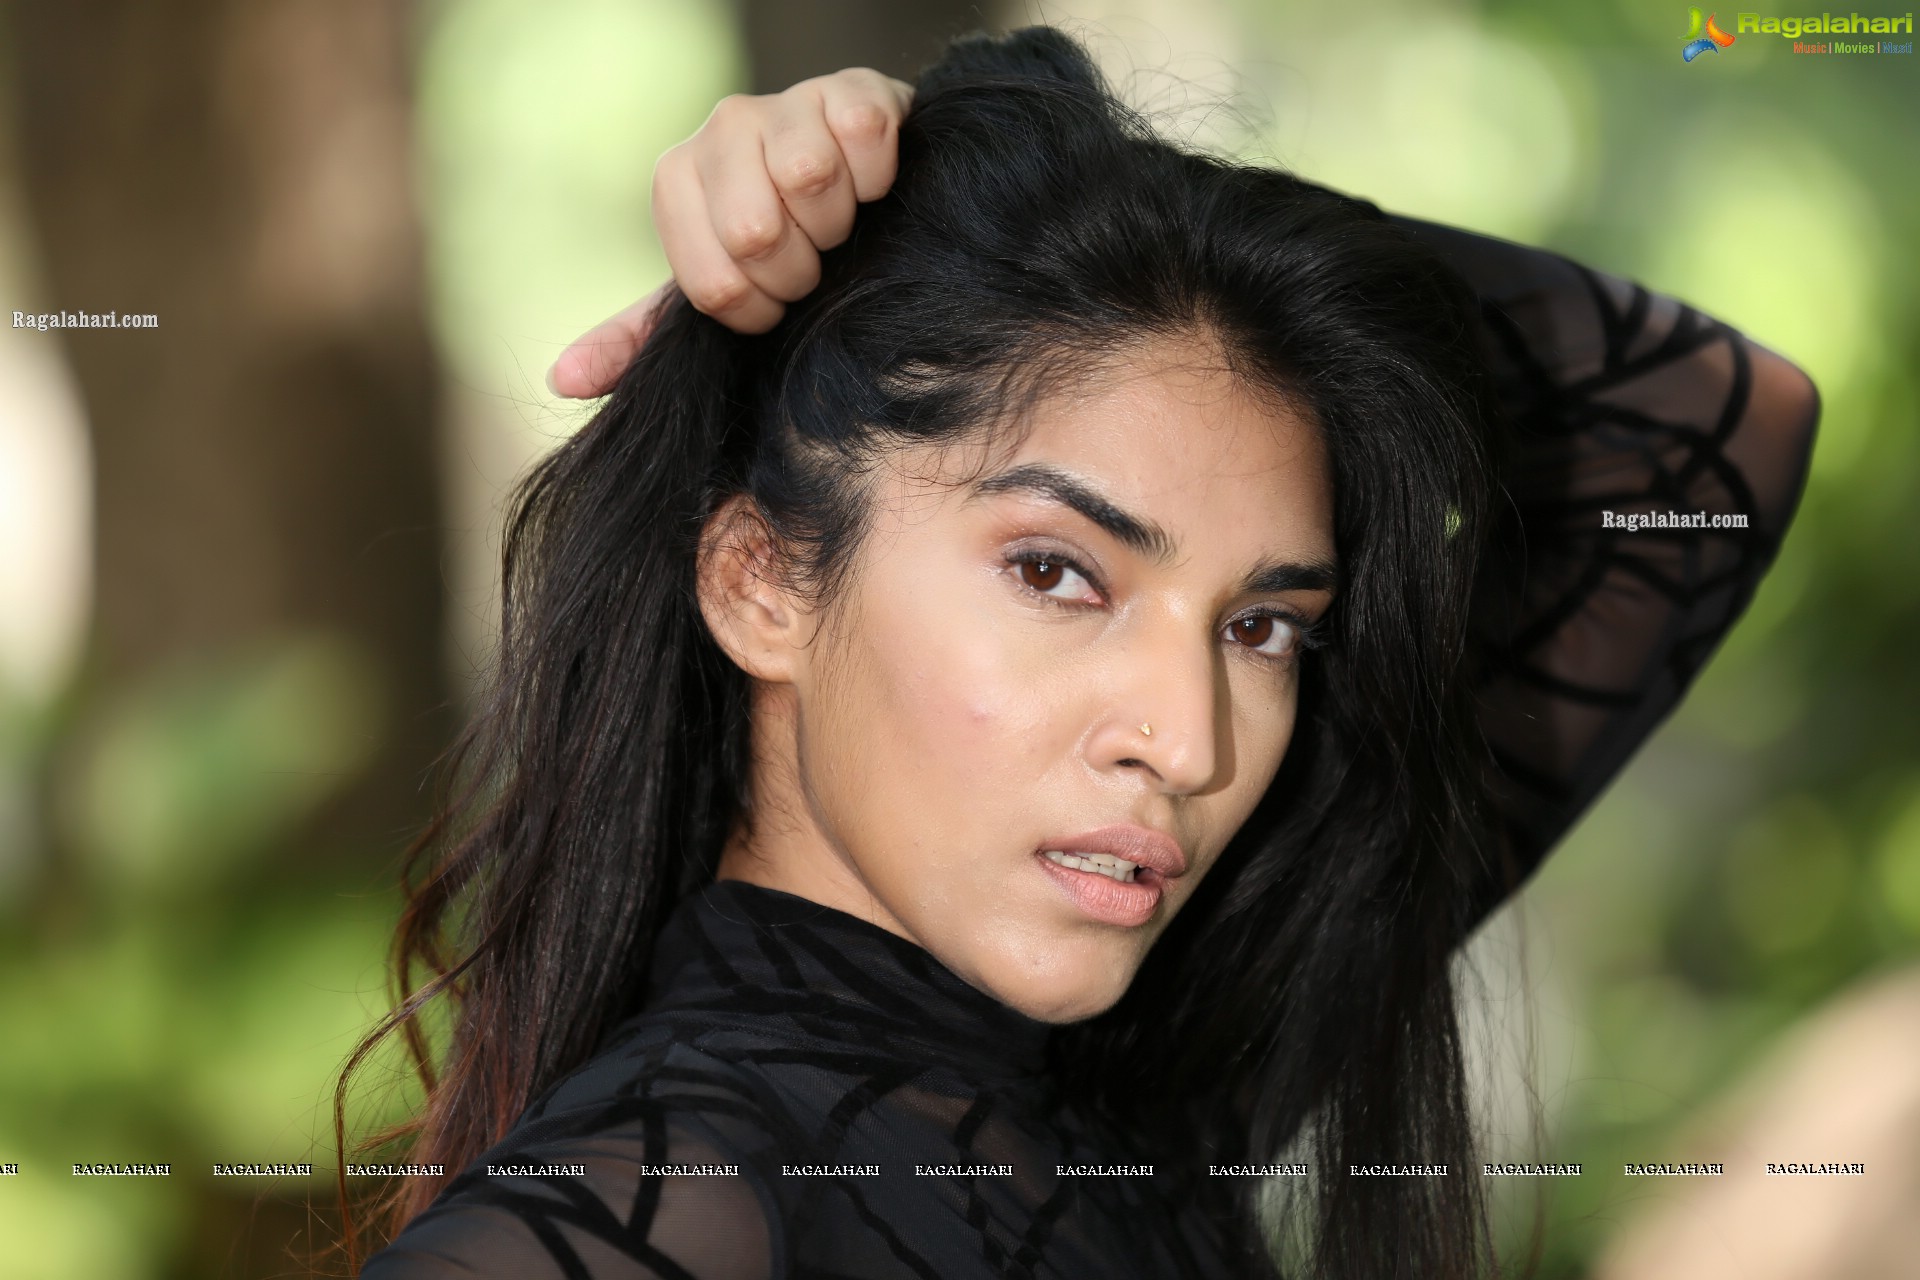 Supraja Narayan in Black Lace Top and Shorts, Exclusive Photo Shoot